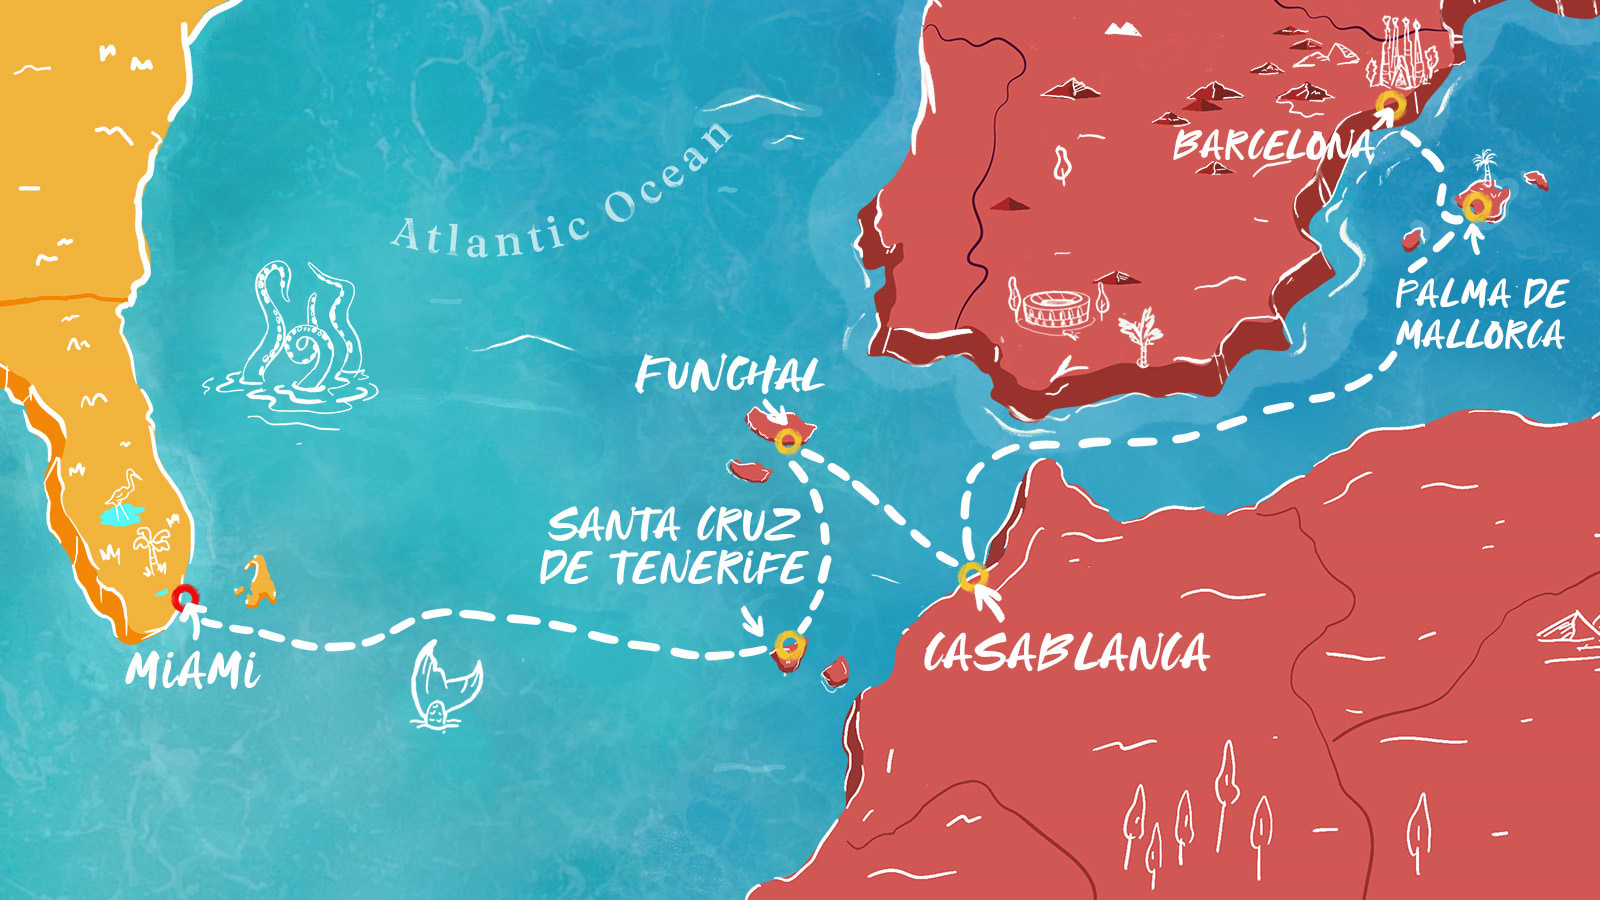 Map of Spain to Miami Transatlantic itinerary